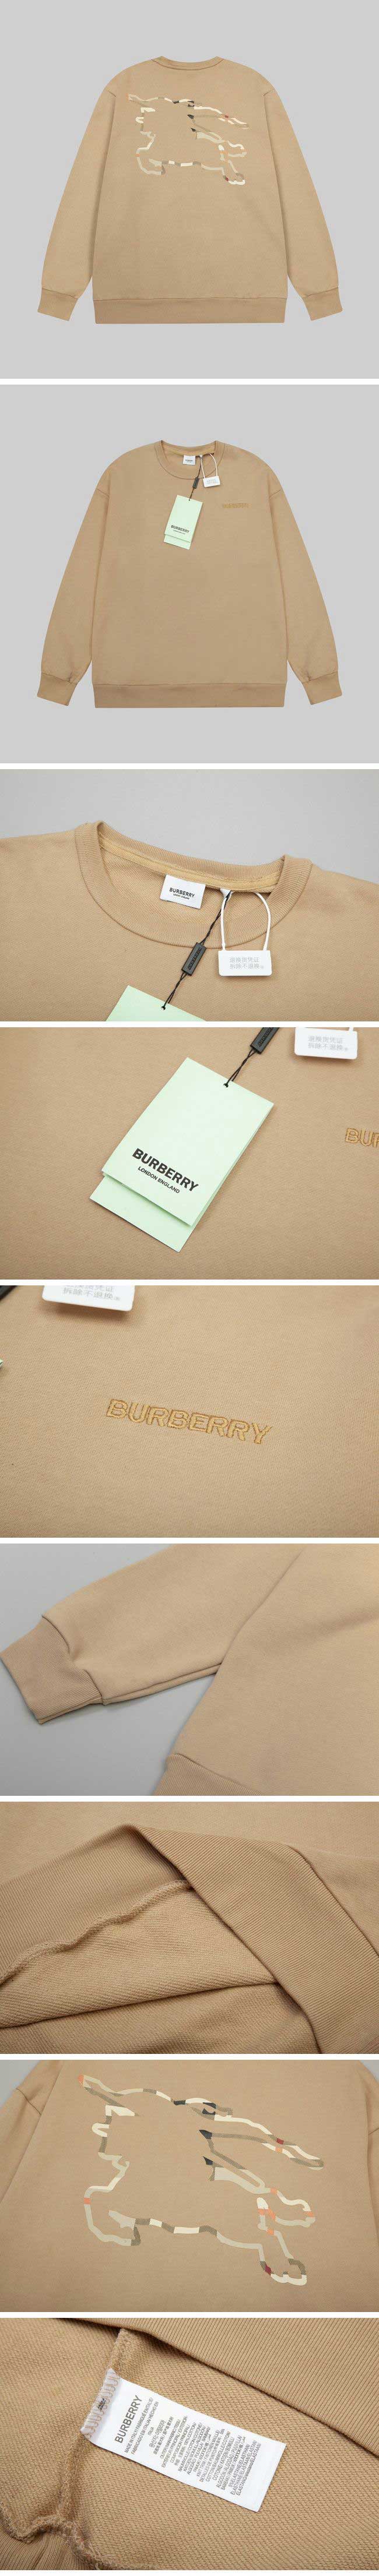 Burberry Silhouette Sorse Print Sweat バーバリー シルエット ホース プリント スウェット ブラウン